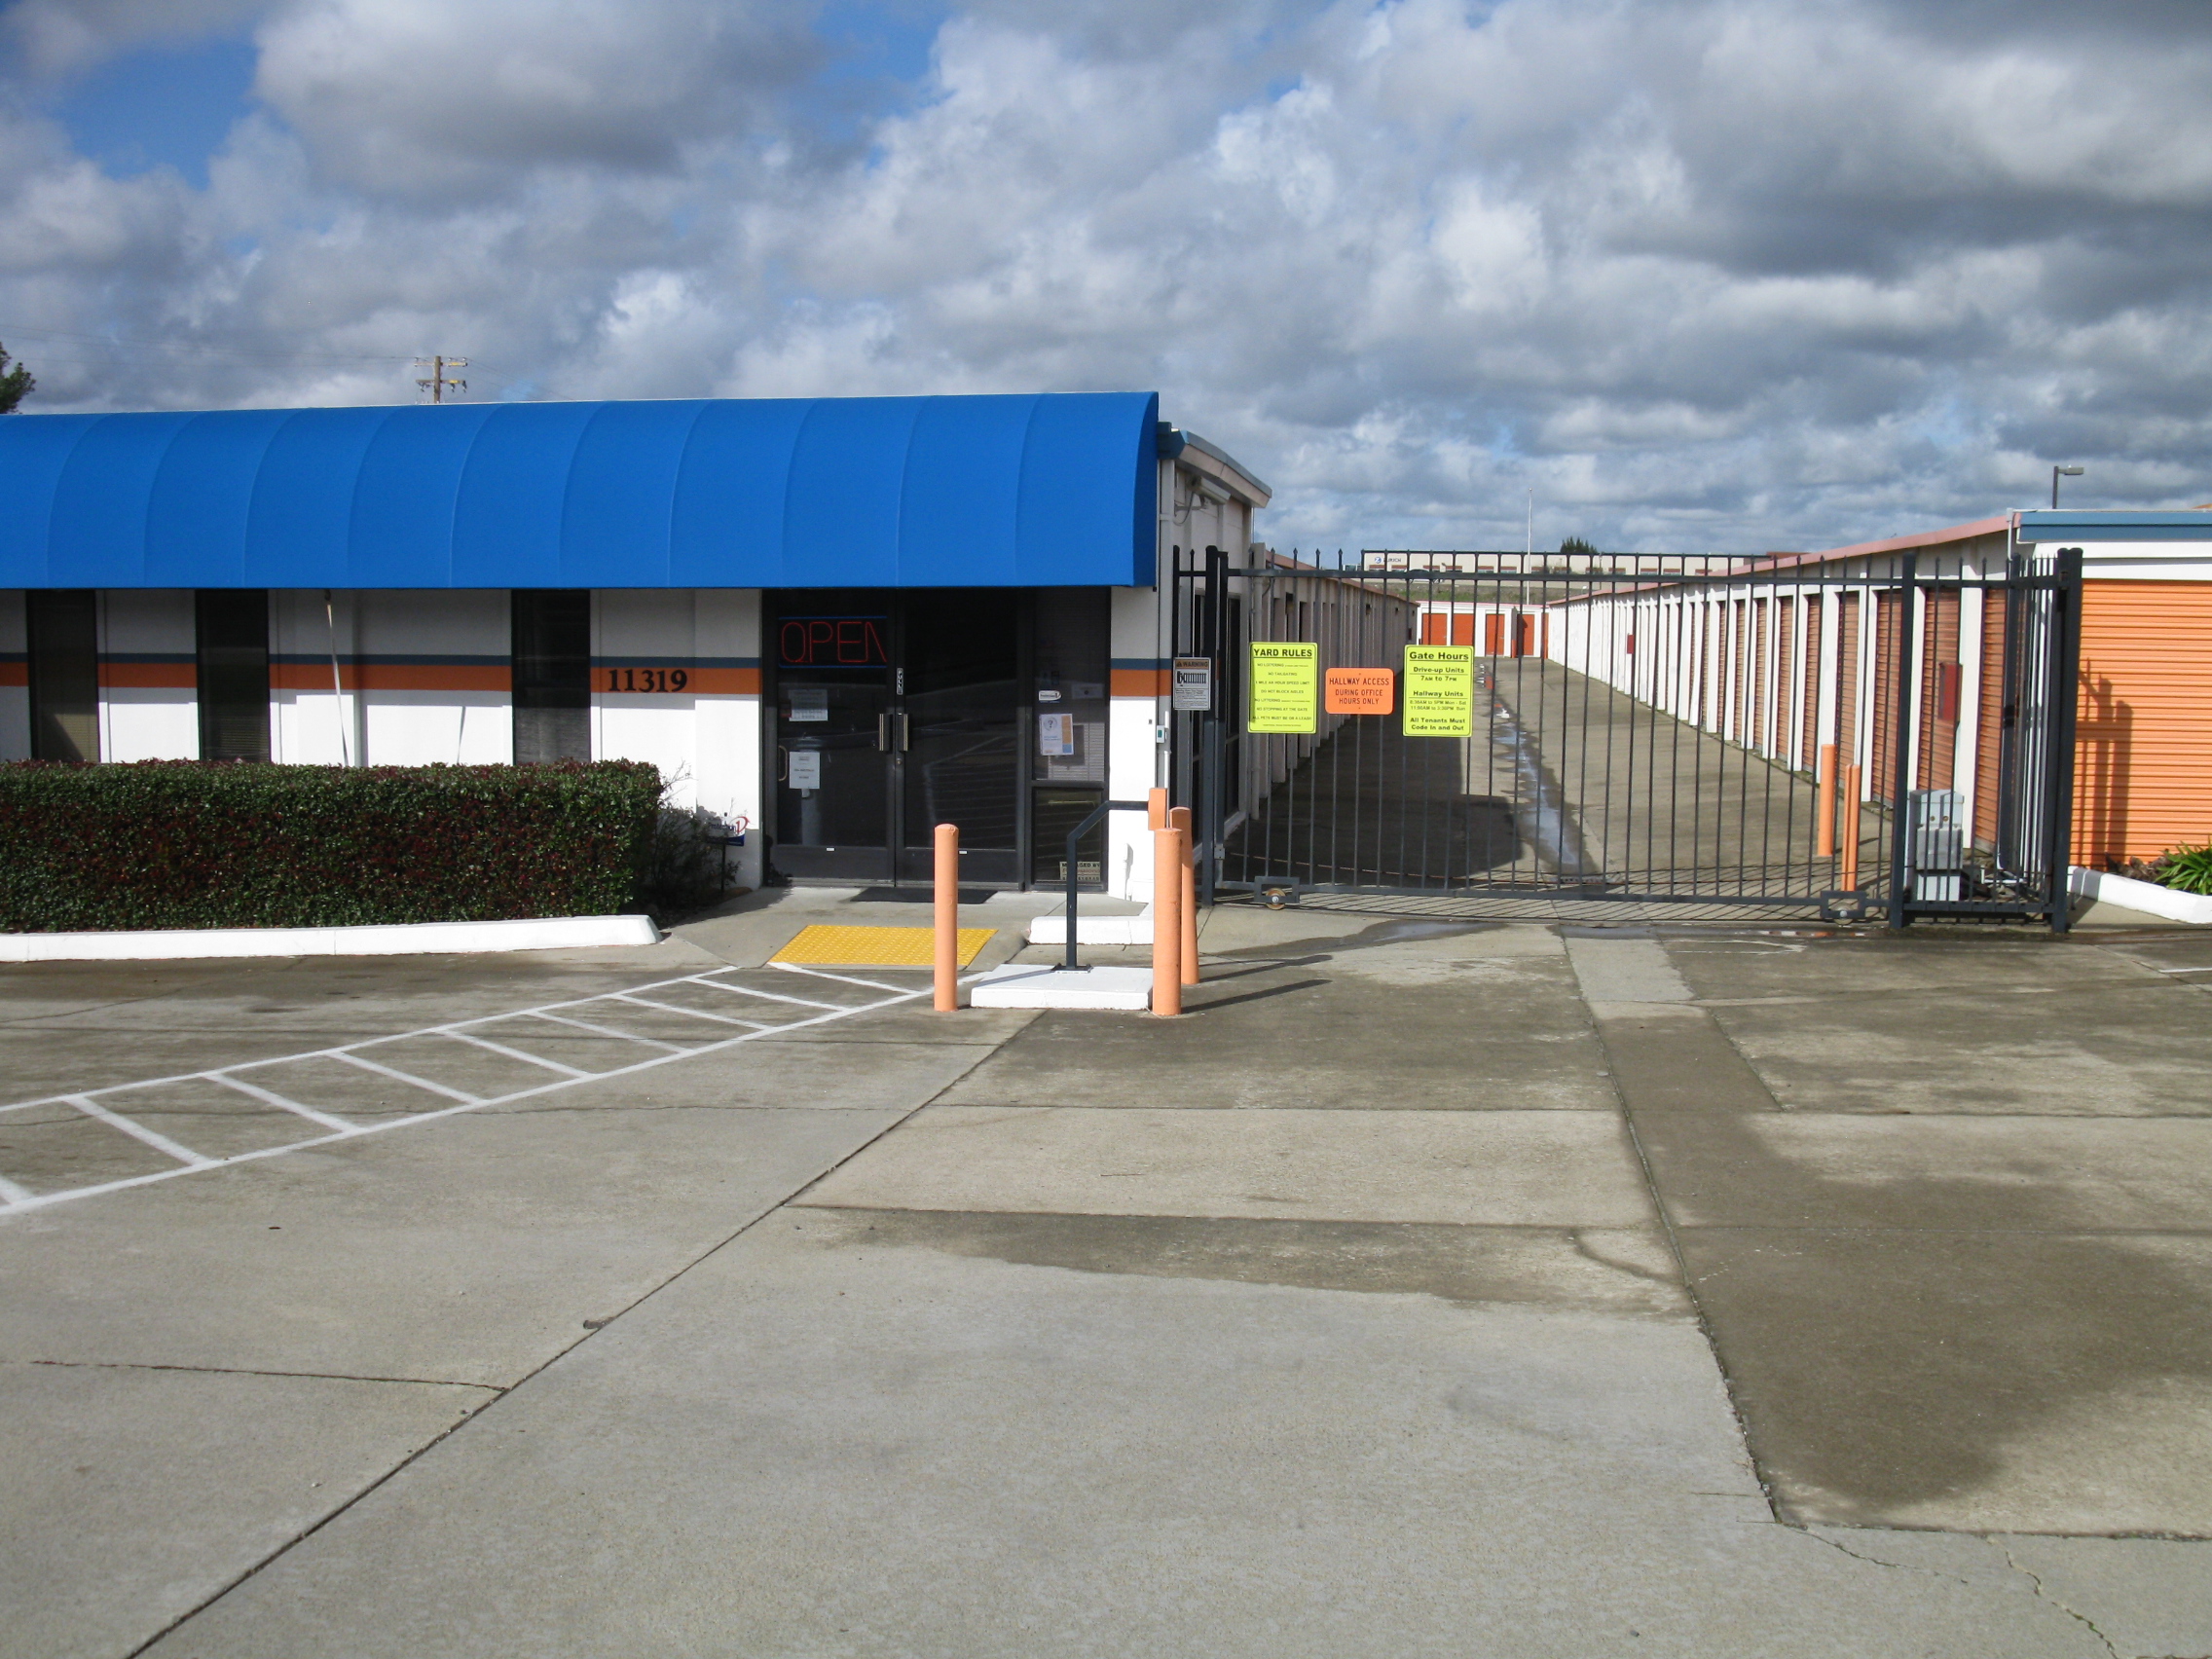 Sentry Storage on Folsom Blvd leasing office and storage gate entrance